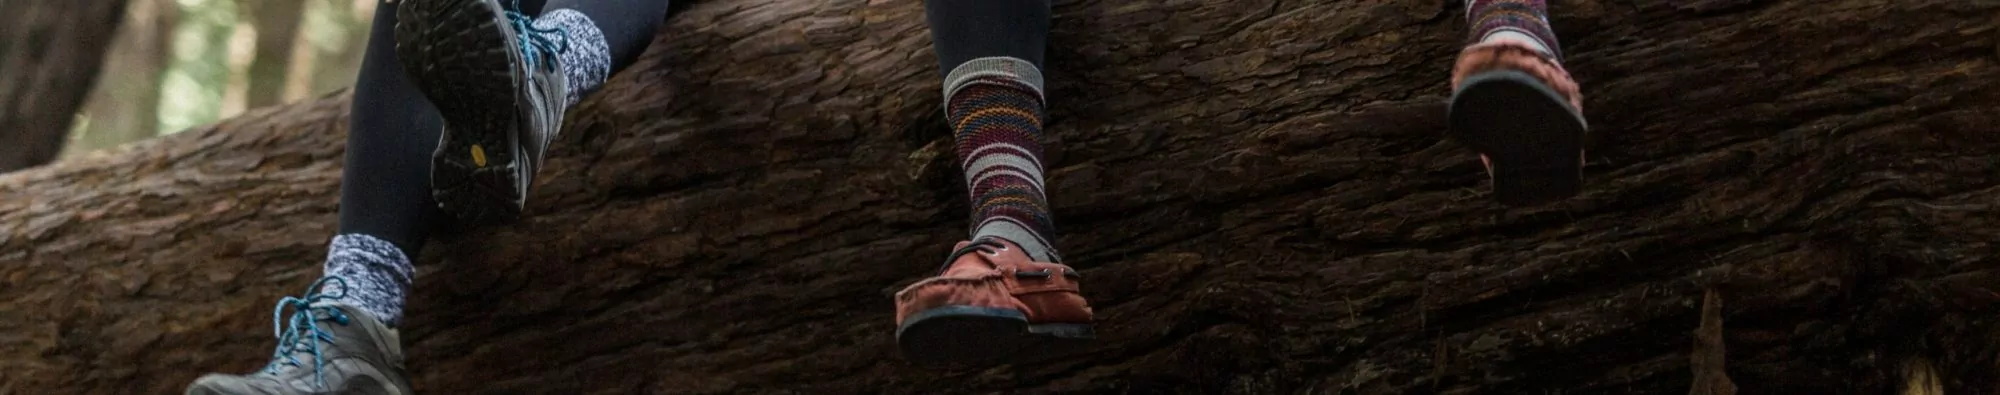 Couple sitting on log with hiking socks